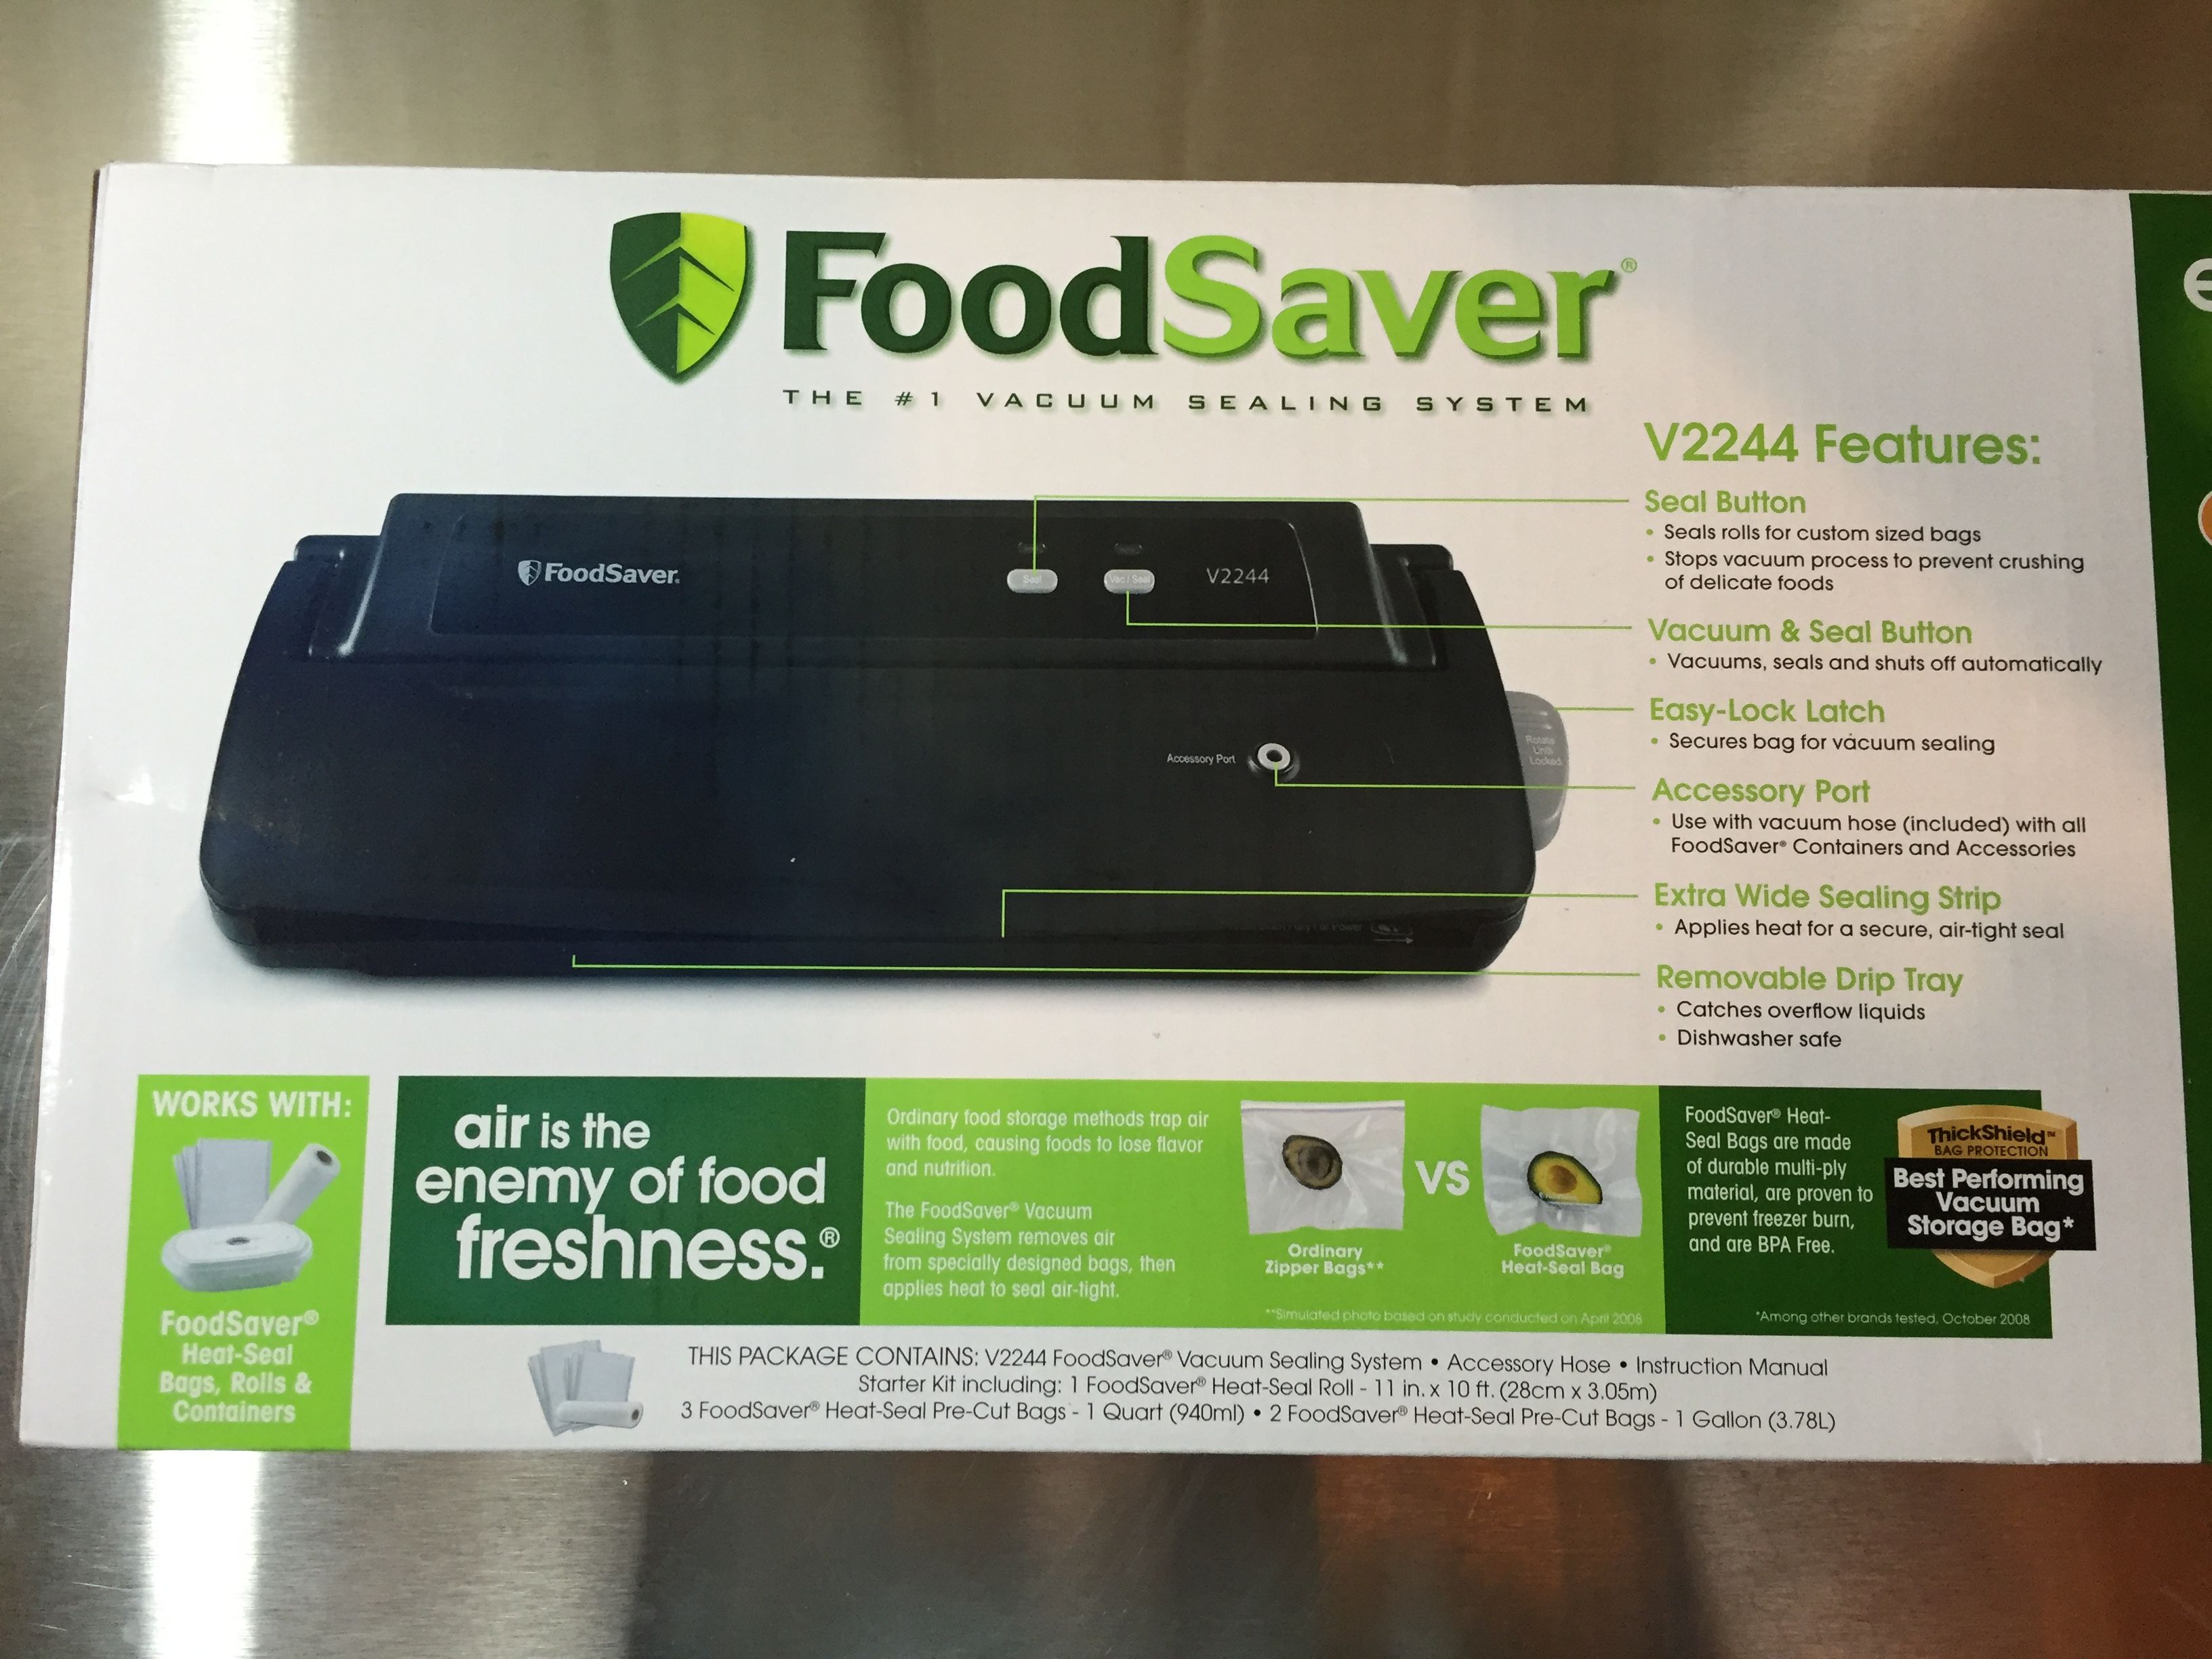 Foodsaver 8 and 11 Vacuum Seal Rolls Multipack | Make Custom-Sized BPA-Free